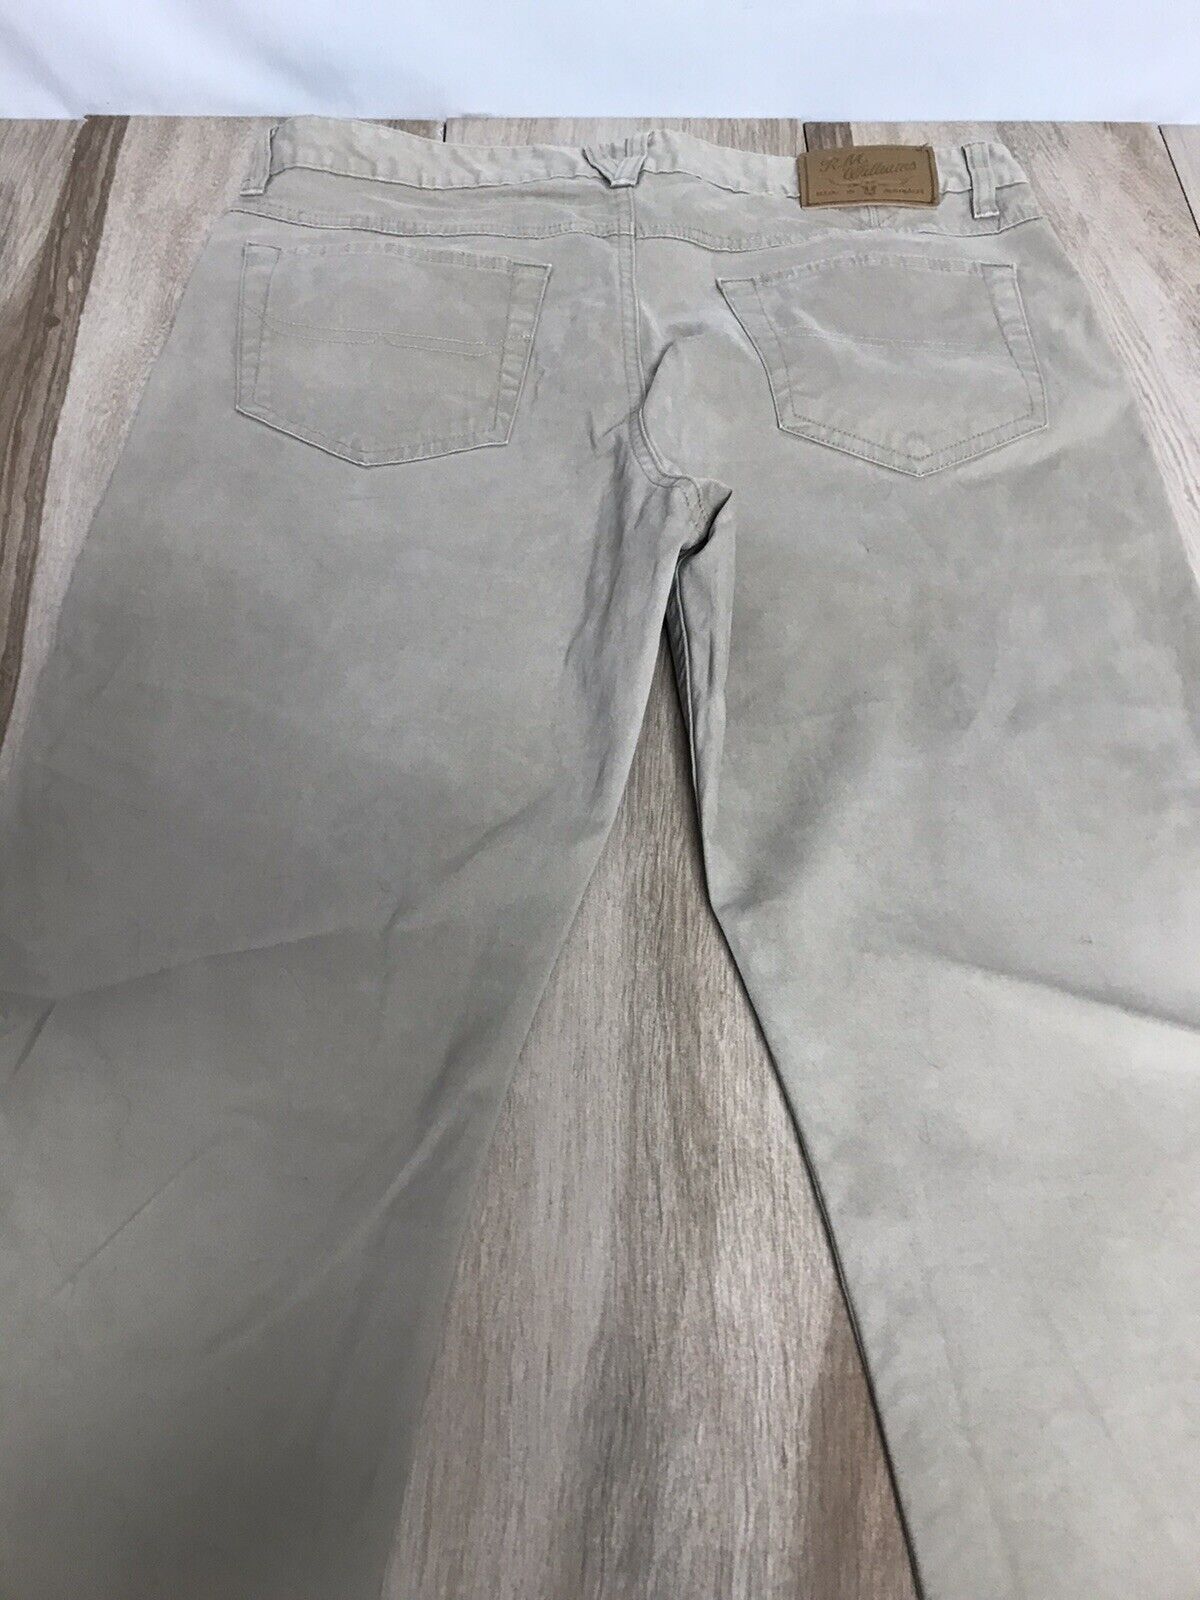 R M Williams Cotton/Wool Blend Denim Blue Jeans Sz 31x32 (G18